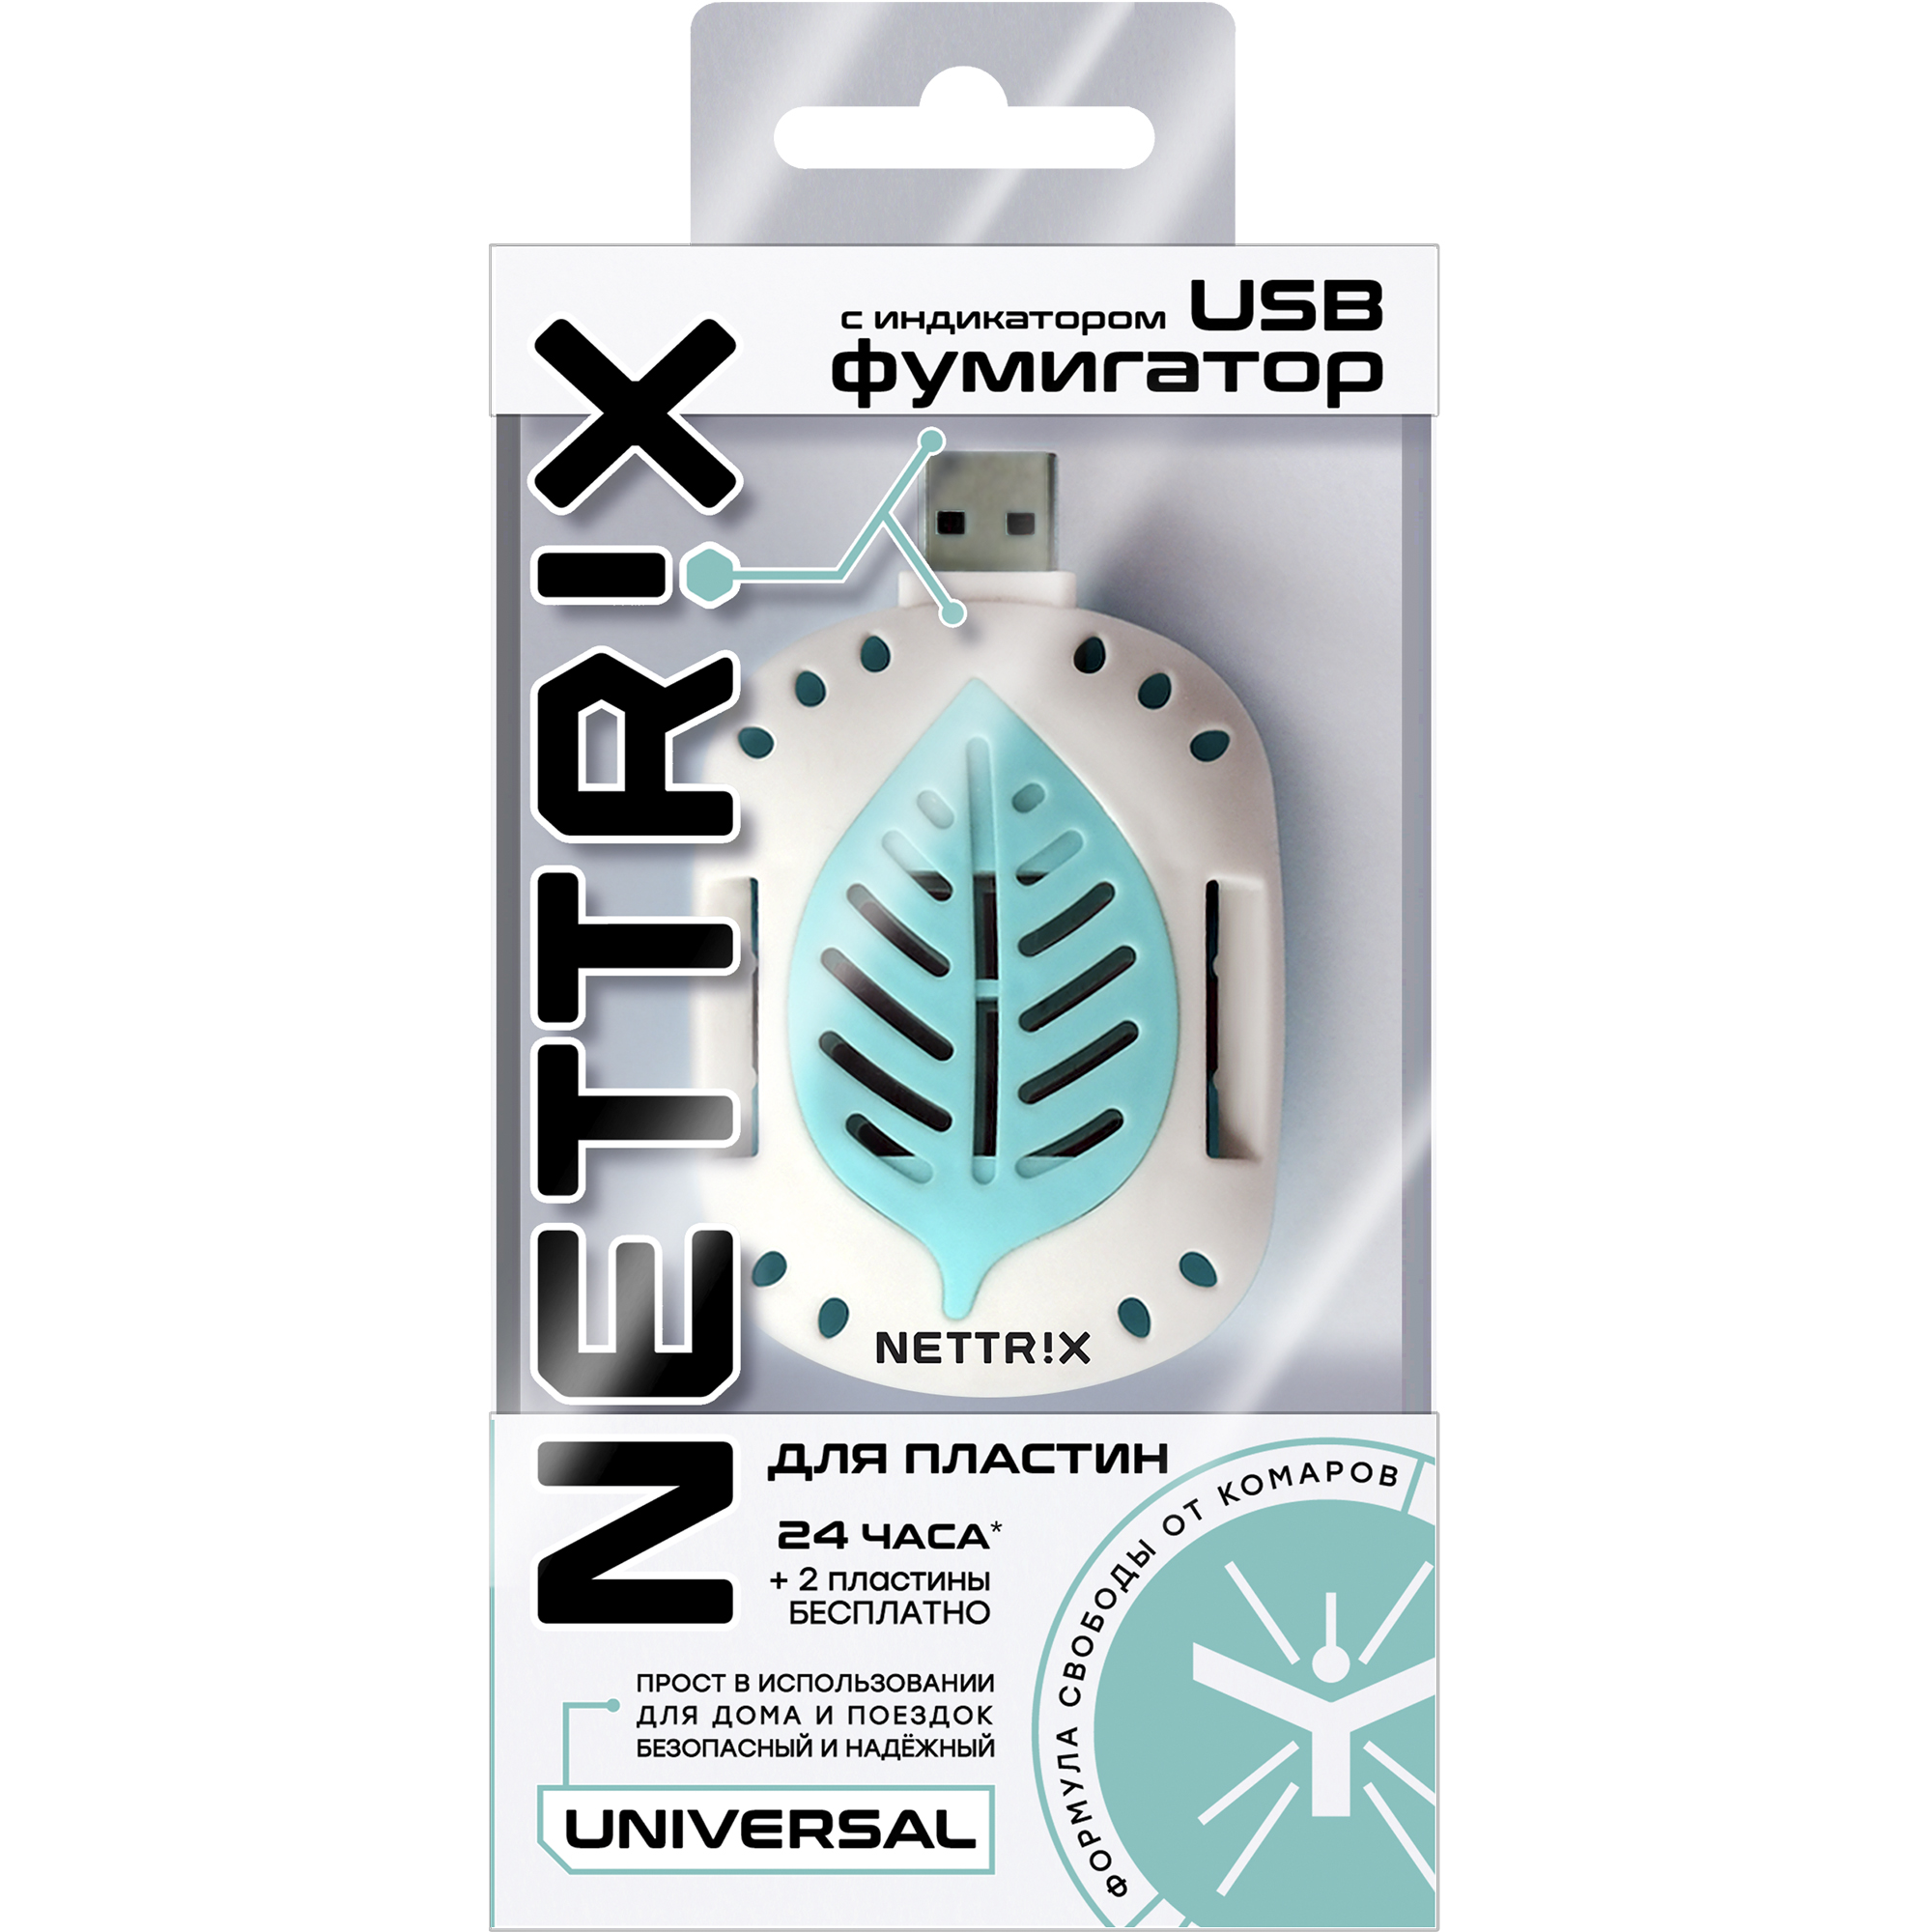 Фумигатор USB NETTRIX Universal 5V для пластин - фото 1